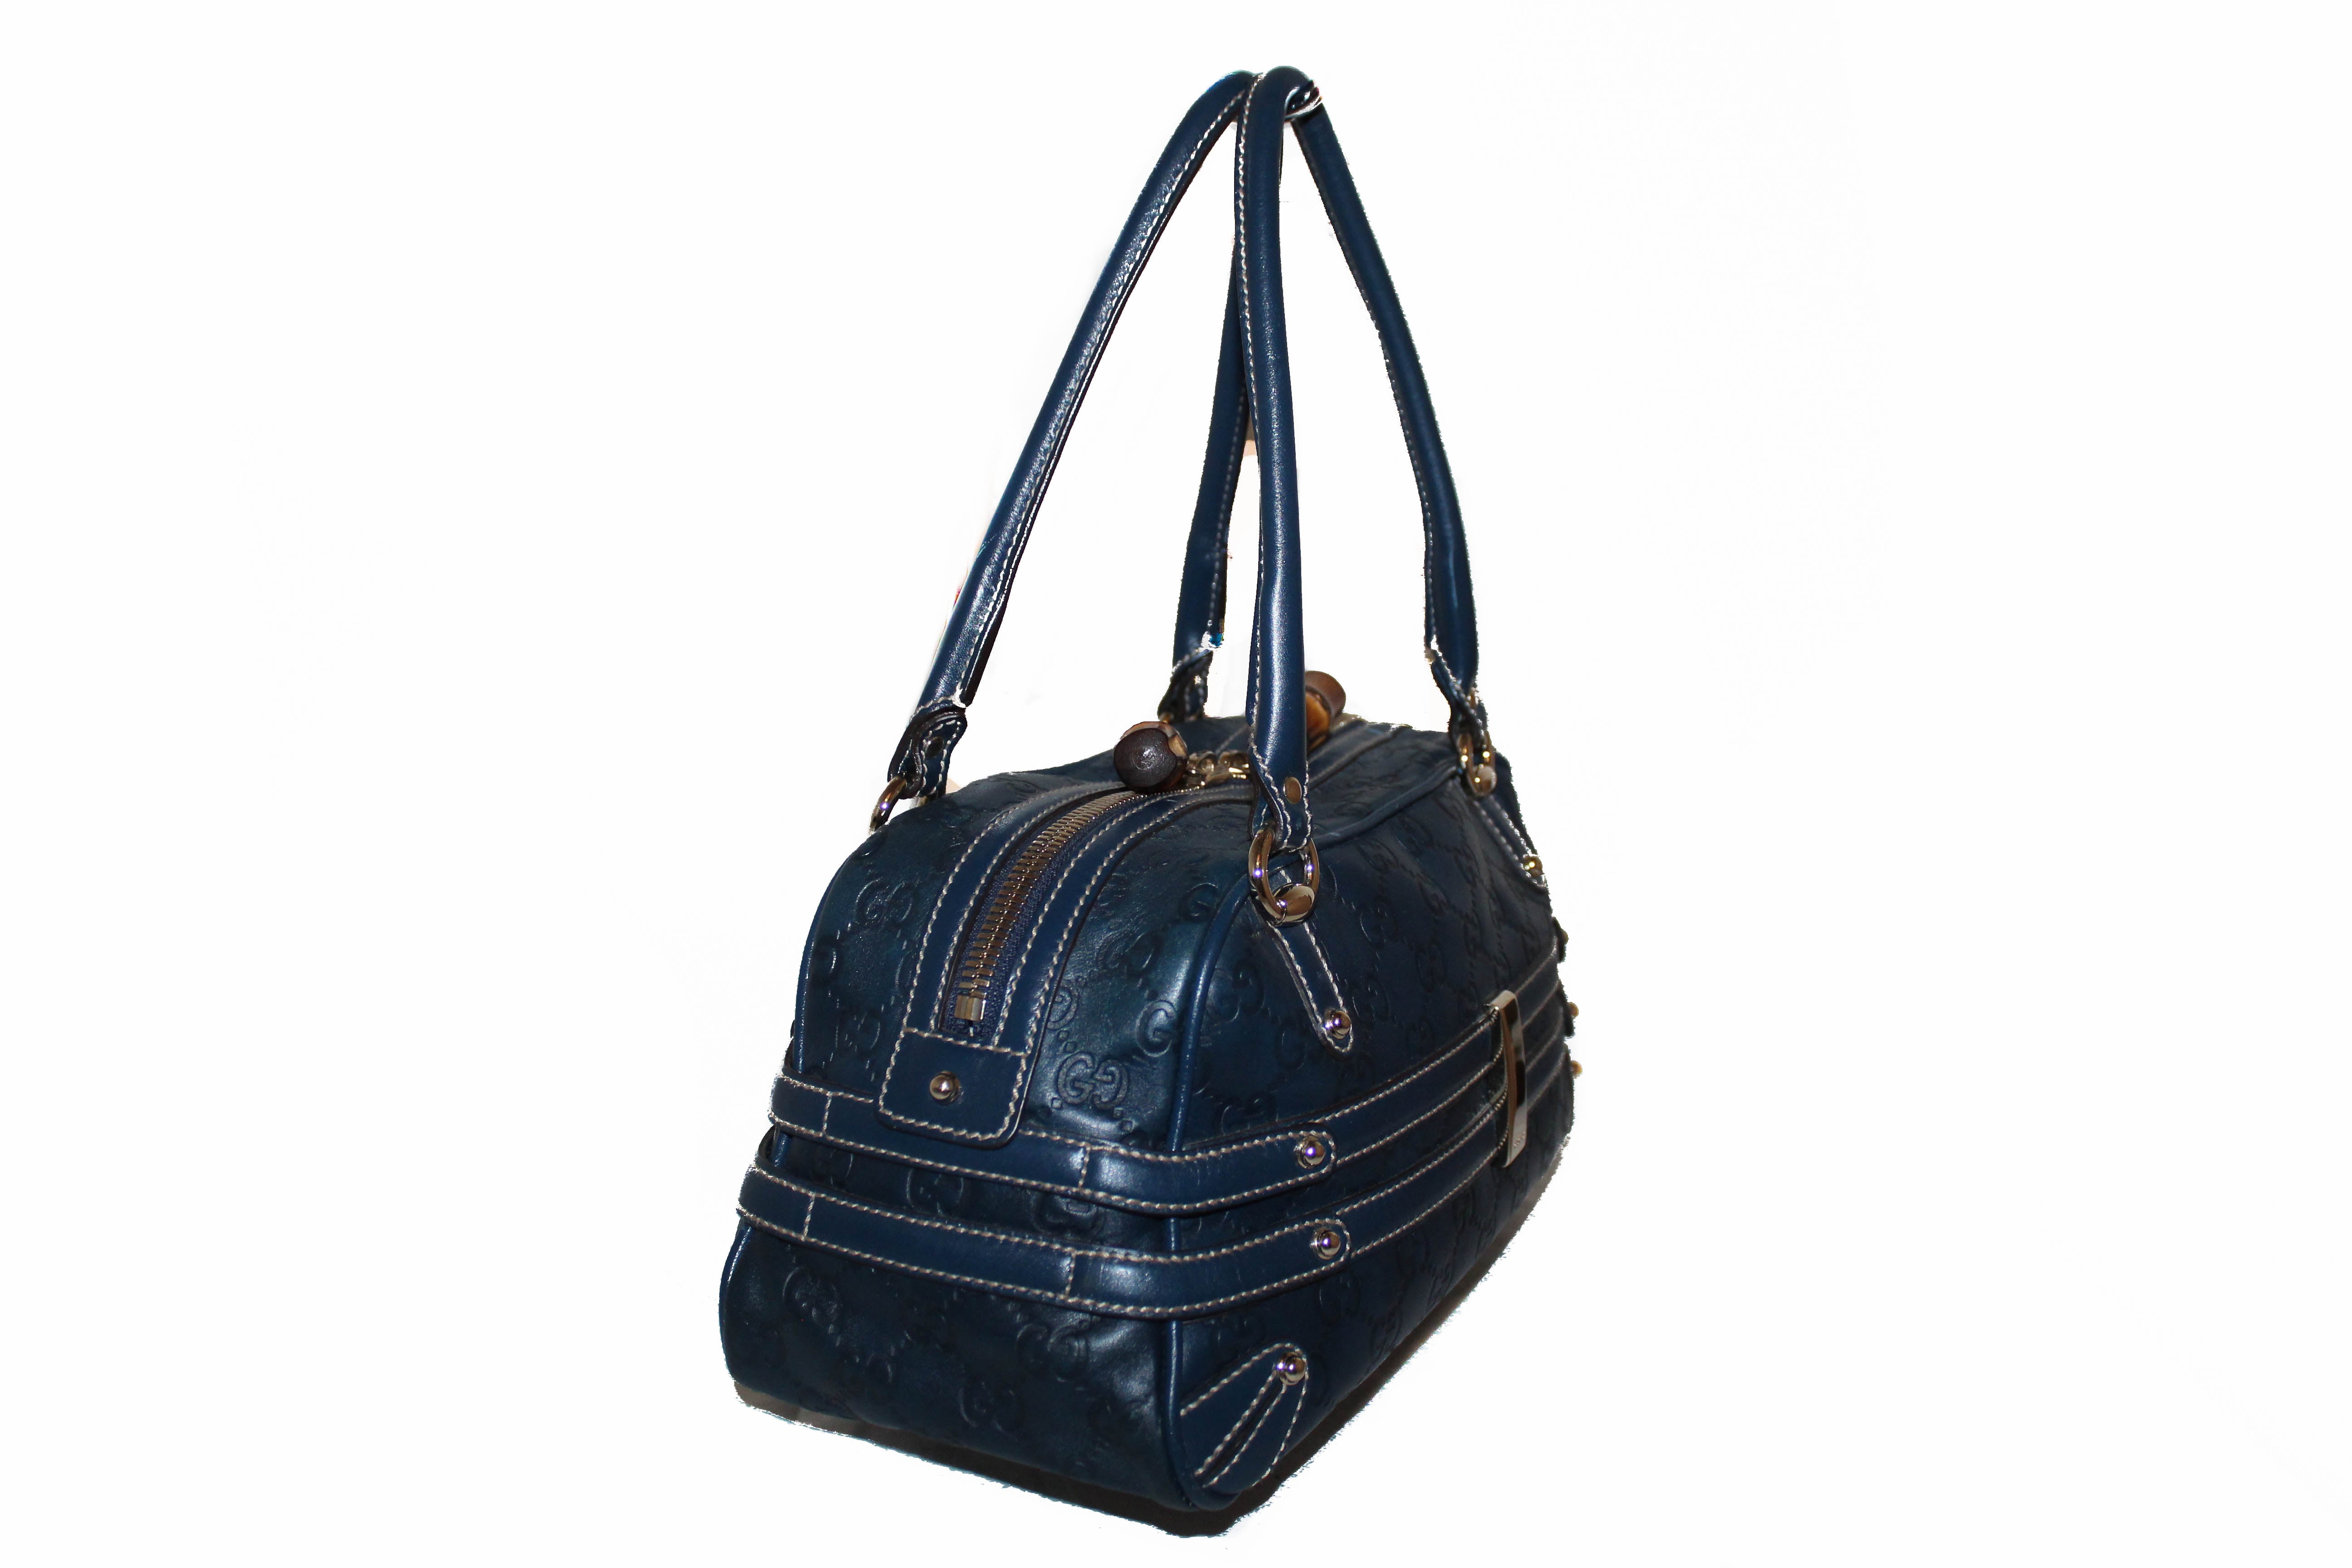 Authentic Gucci Navy Blue Guccissima Leather Horsebit Boston Handbag 159399